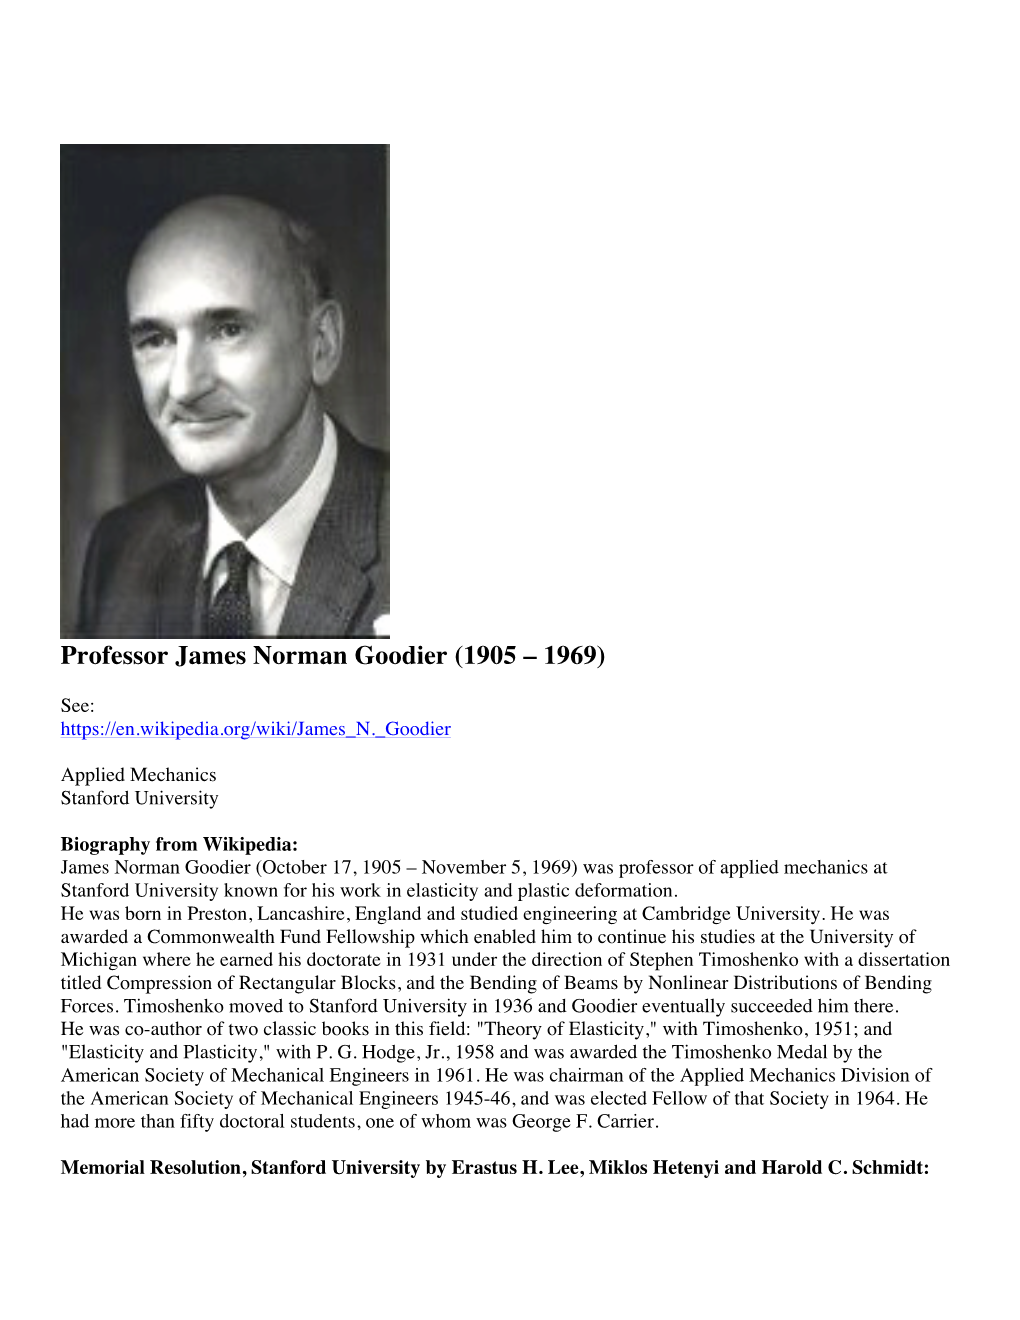 Prof. James Norman Goodier